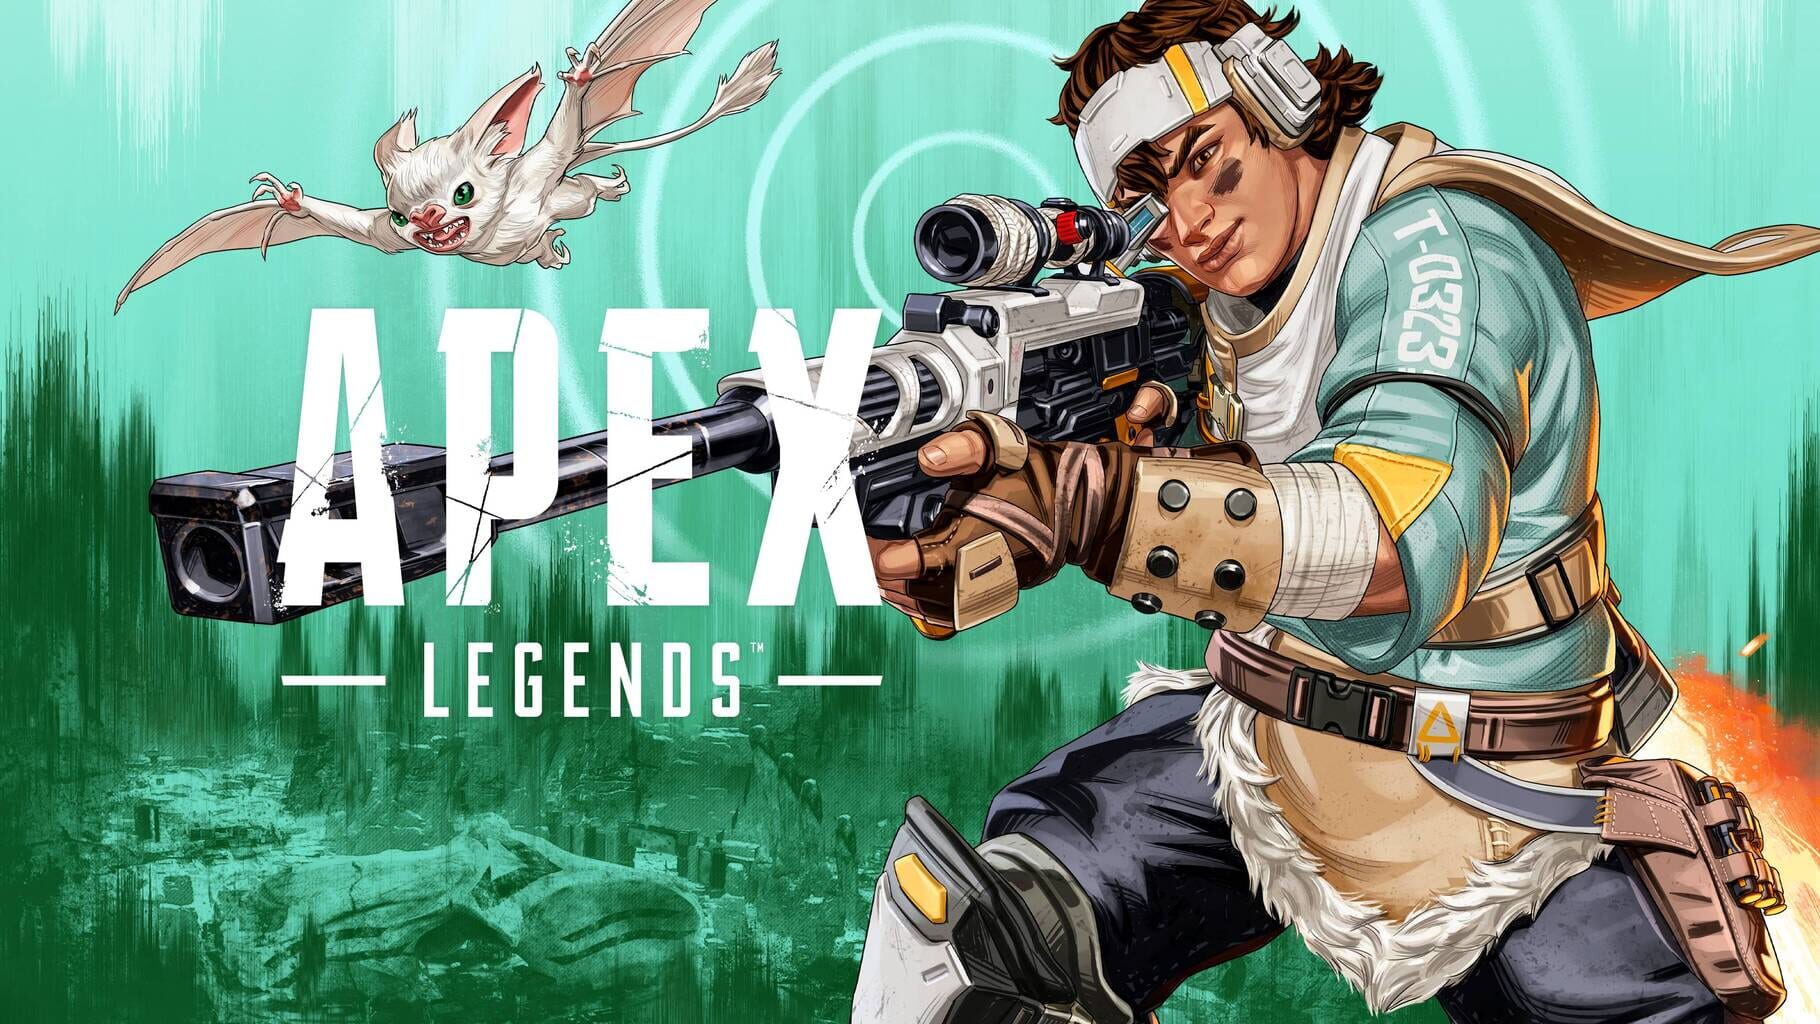 Apex Legends: Hunted screenshot